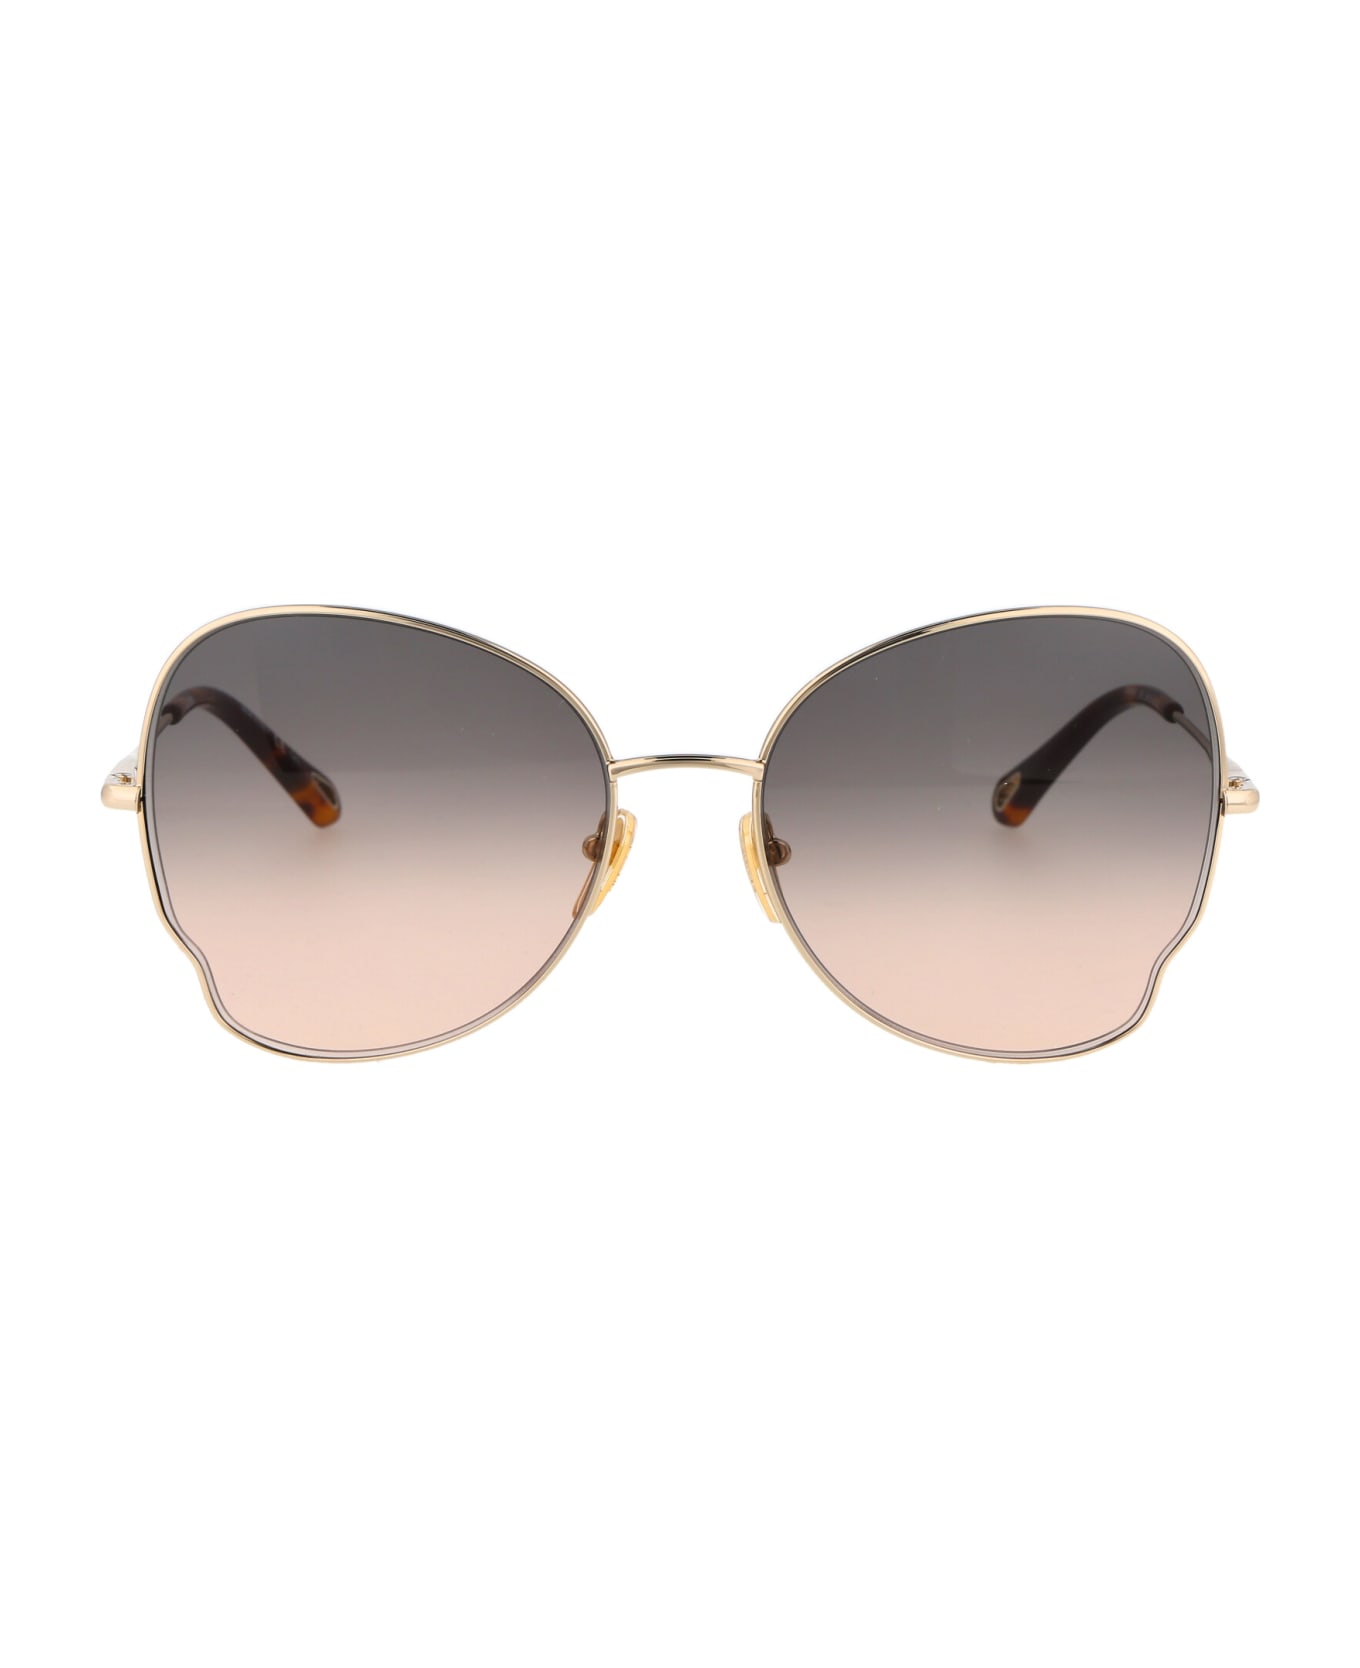 Chloé Eyewear Ch0094s Sunglasses - 001 GOLD GOLD BROWN サングラス